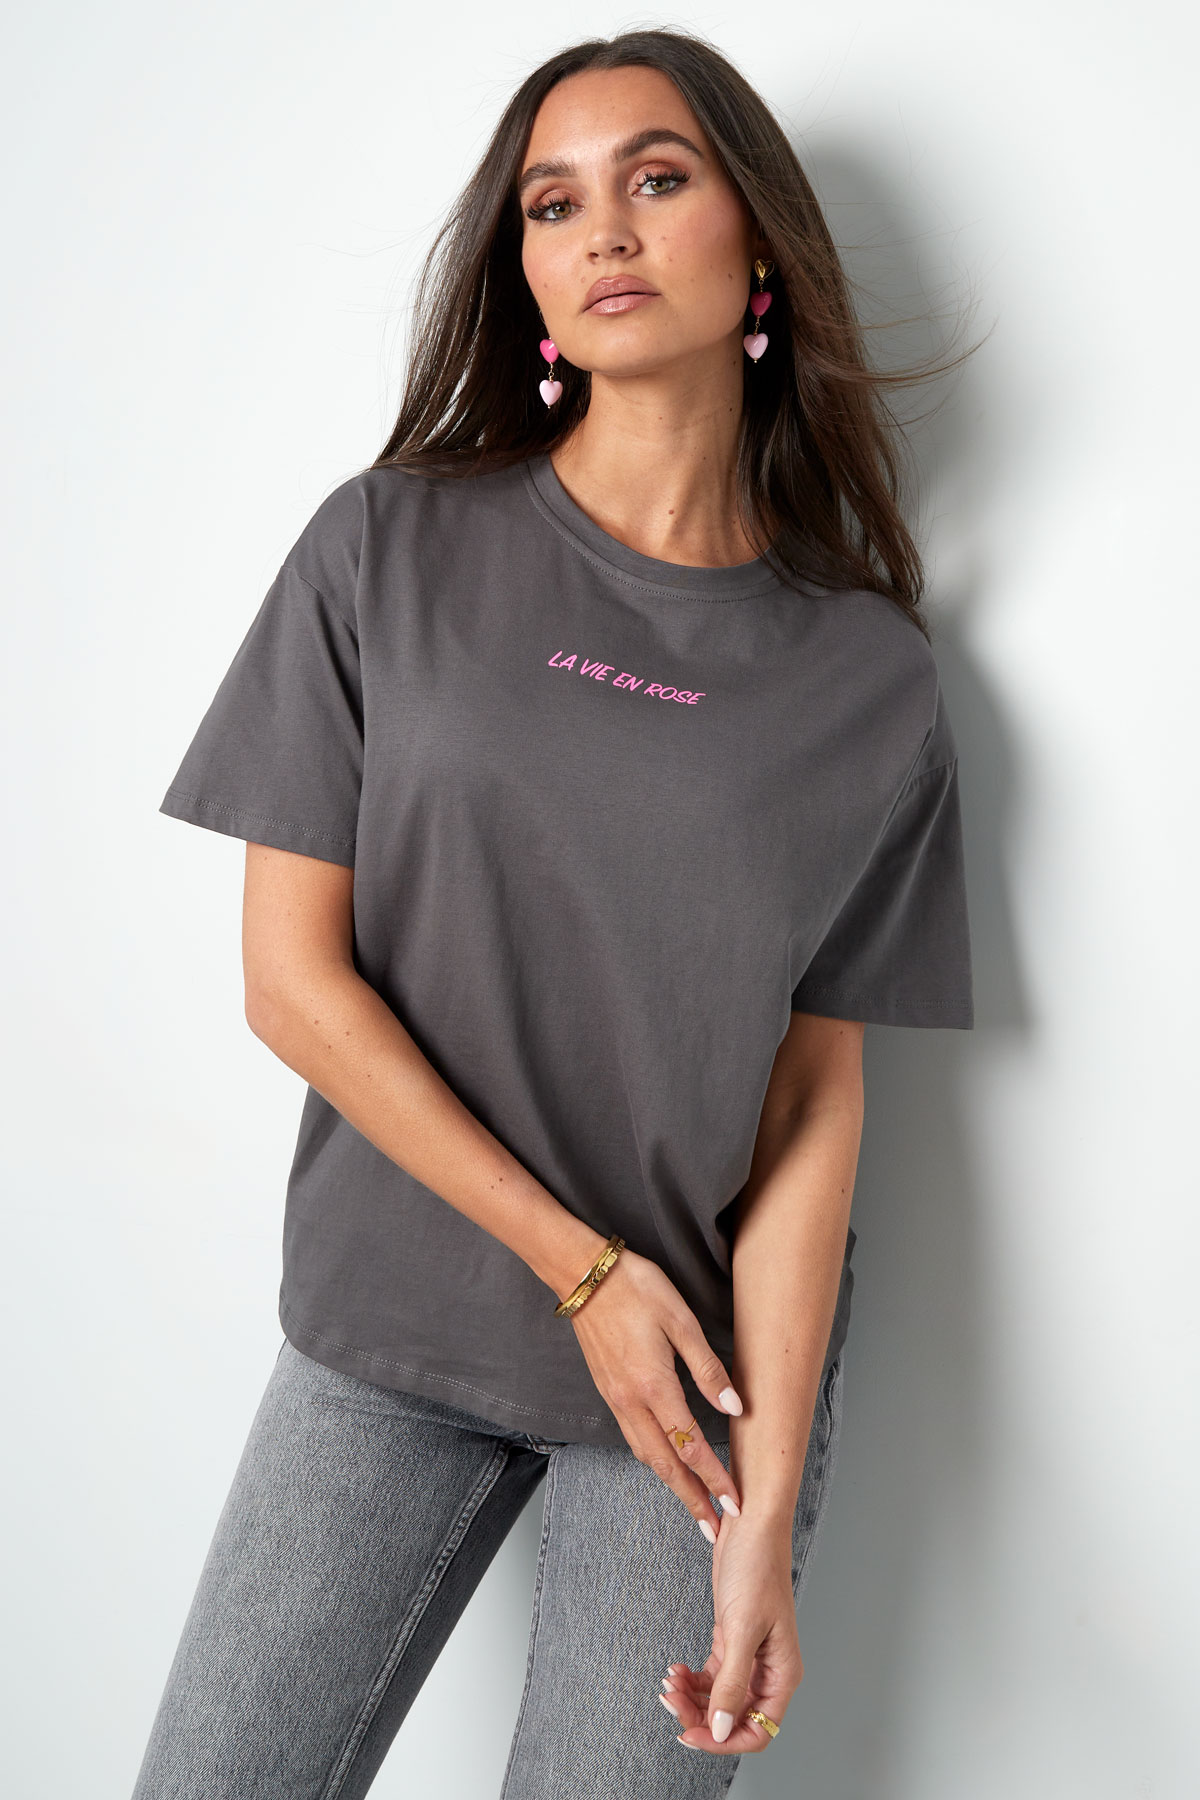 T-shirt la vie en rose - dark gray